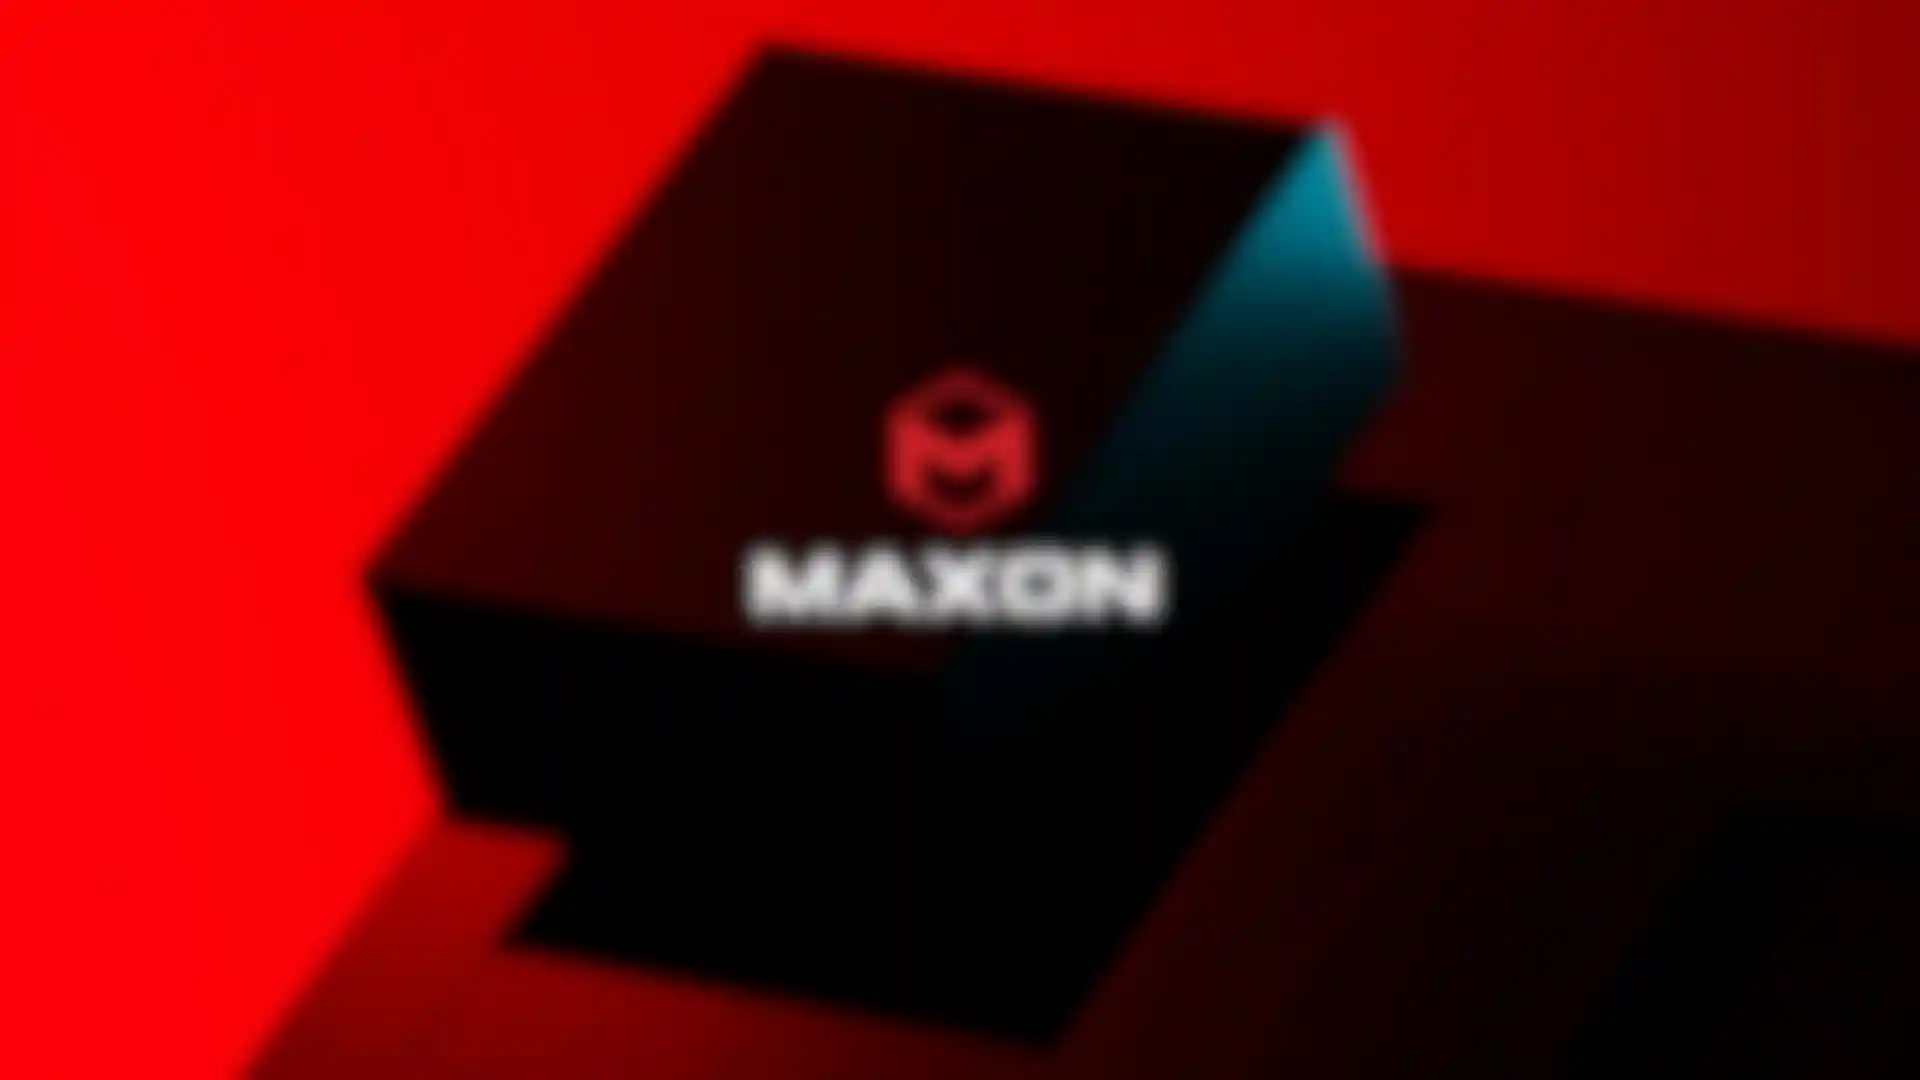 Maxon Unveils a New Corporate Identity image